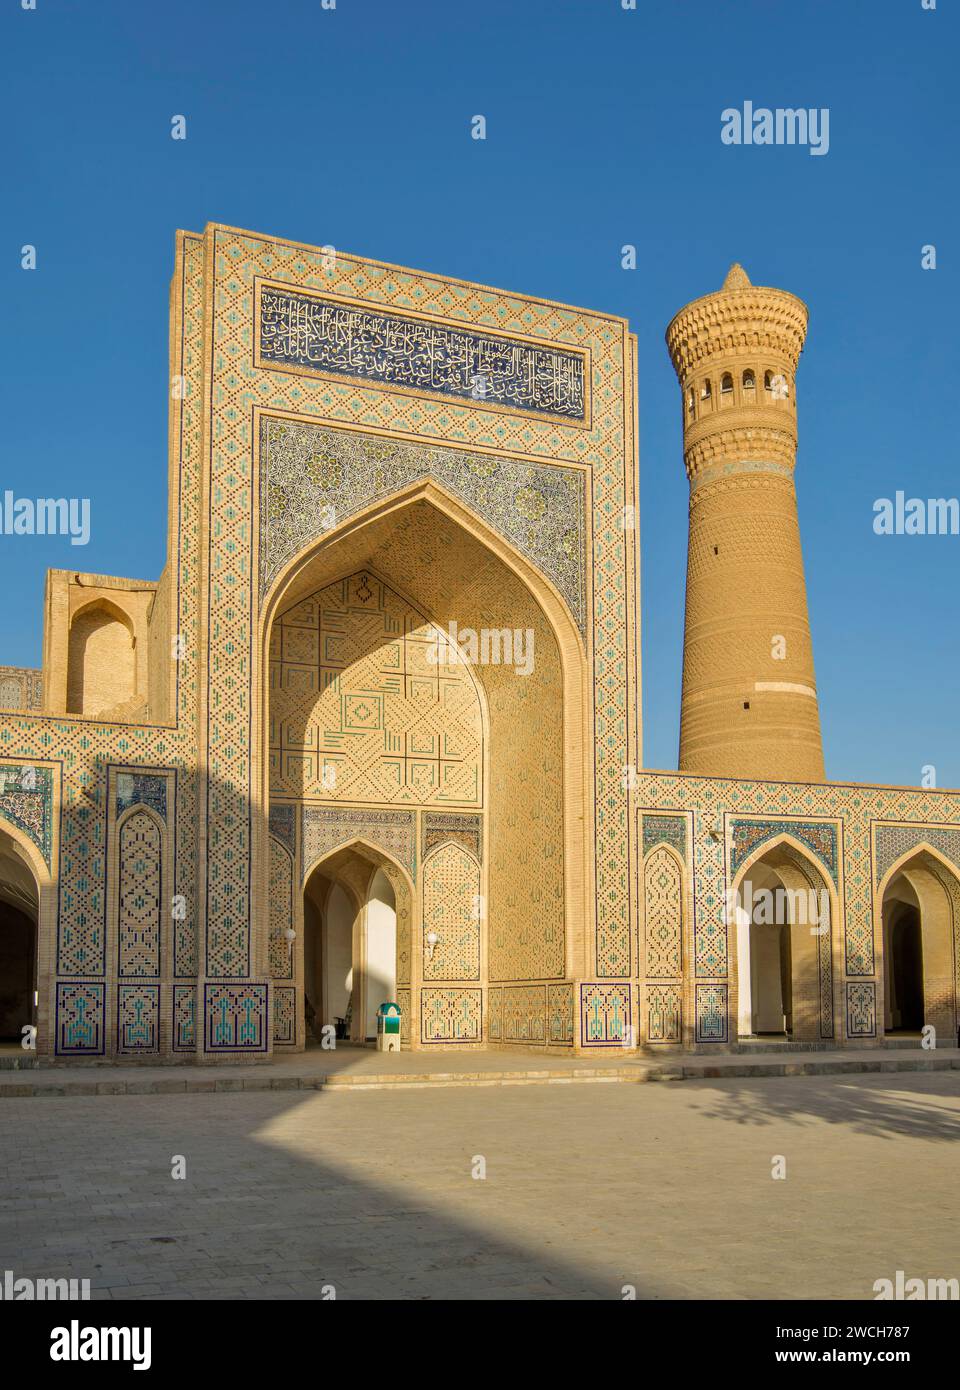 Innenhof der Kalan-Moschee (Masjid-i Kalan) und Kalan-Minarett von Po-i-Kalan (POI Kalan) - islamischer religiöser Komplex in Bukhara. Usbekistan Stockfoto